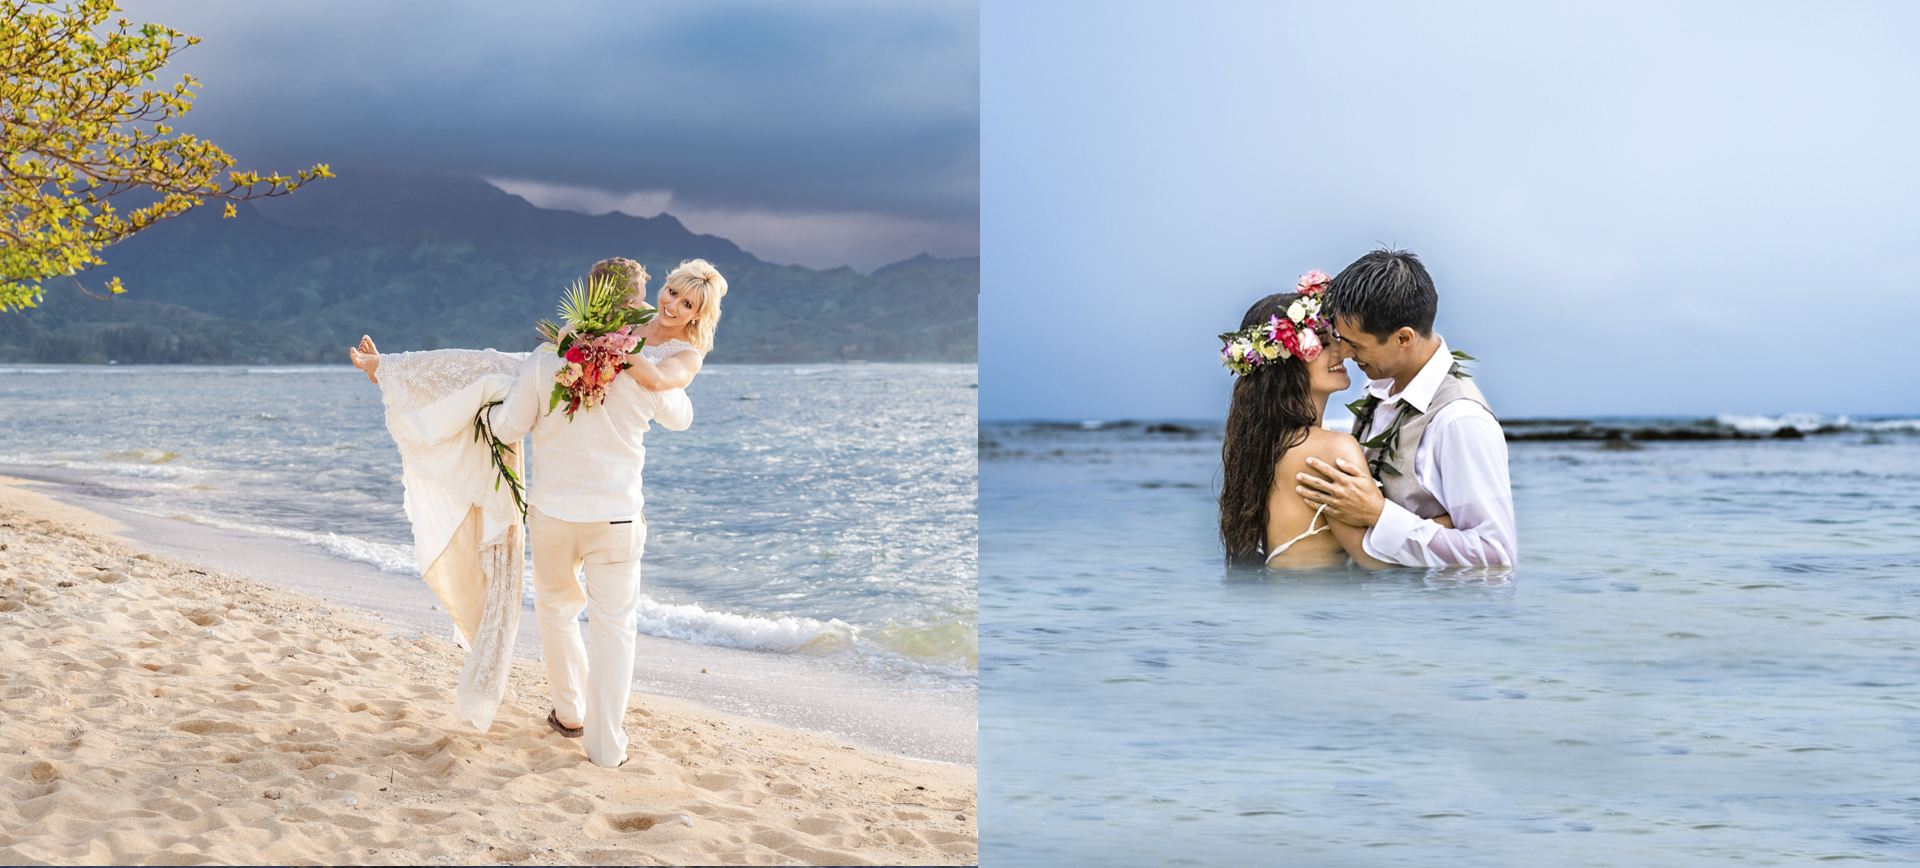 kauai elopement package in hawaii